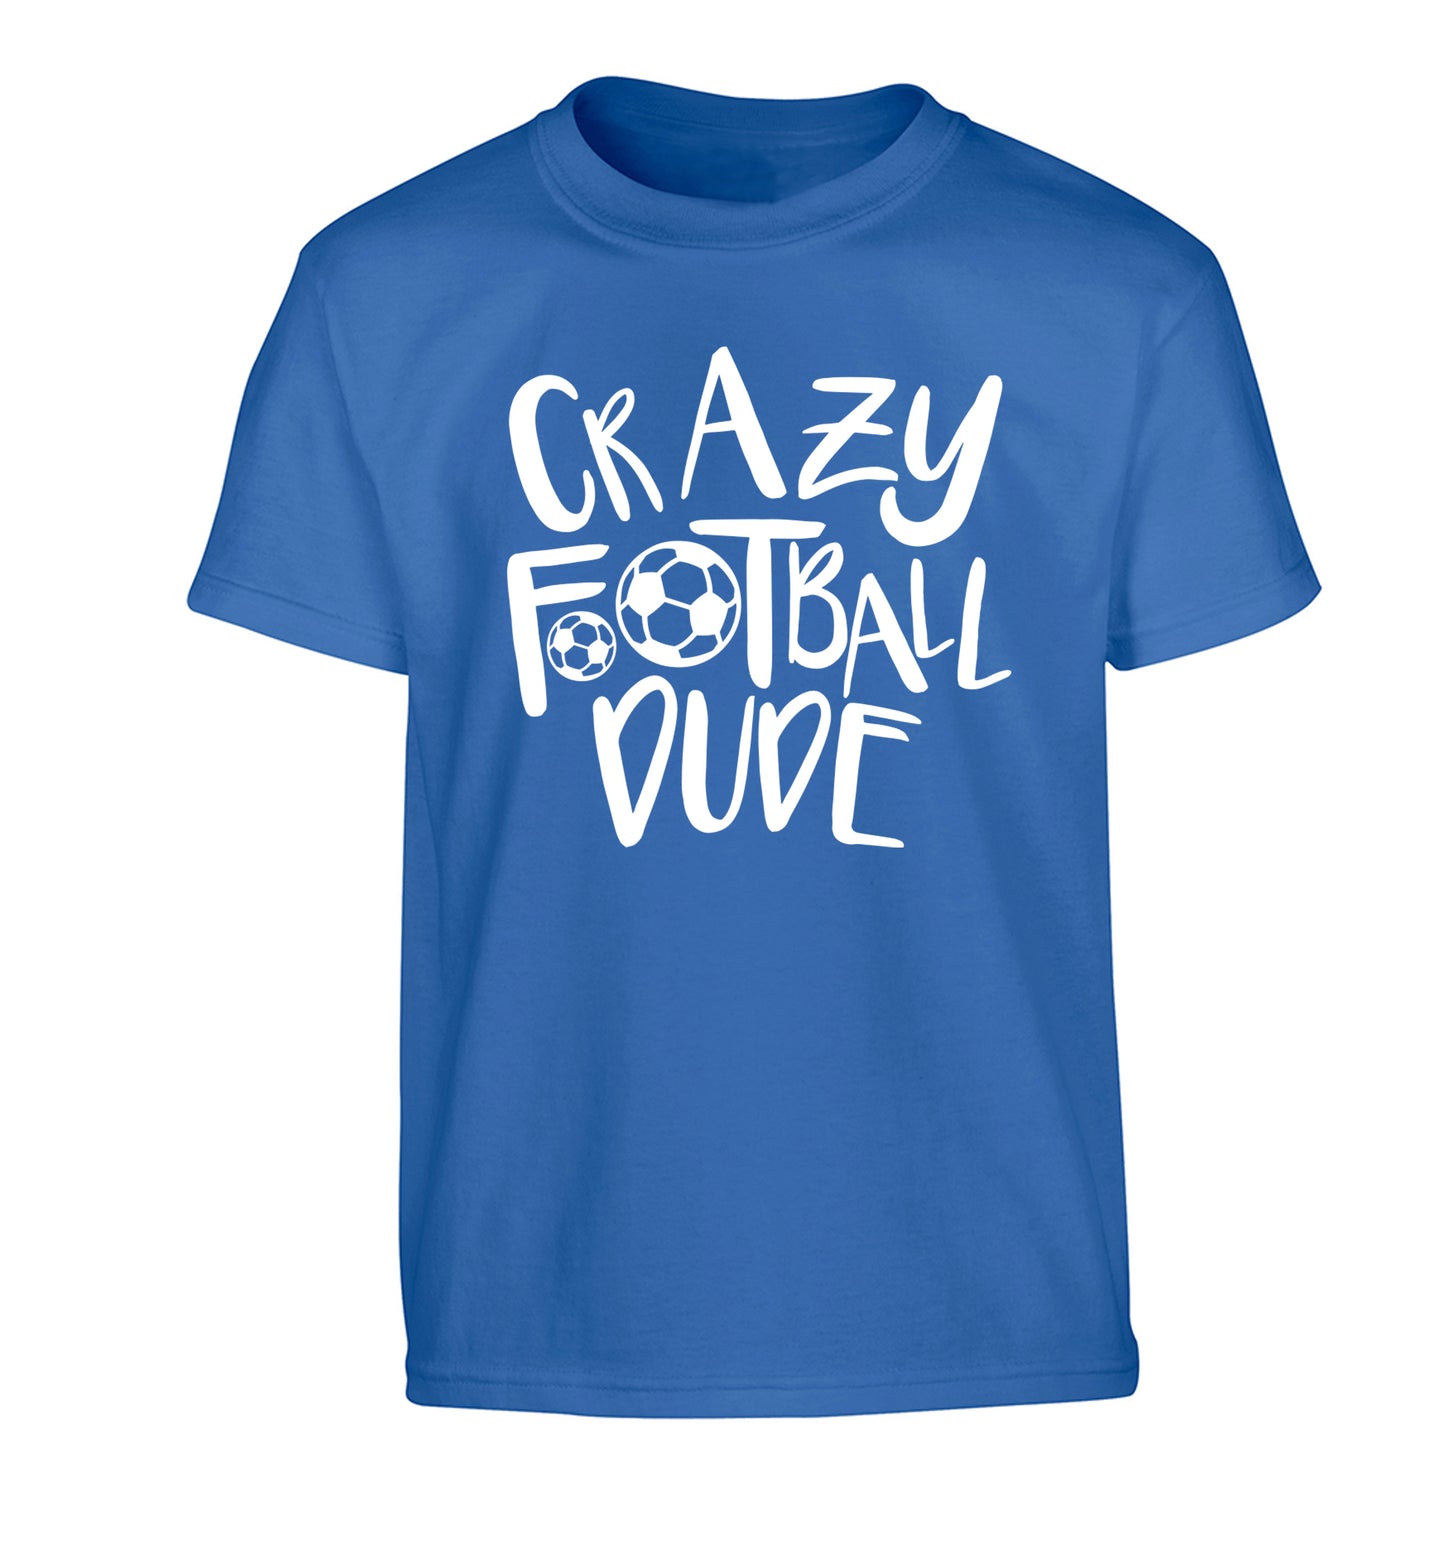 Crazy football dude Children's blue Tshirt 12-14 Years